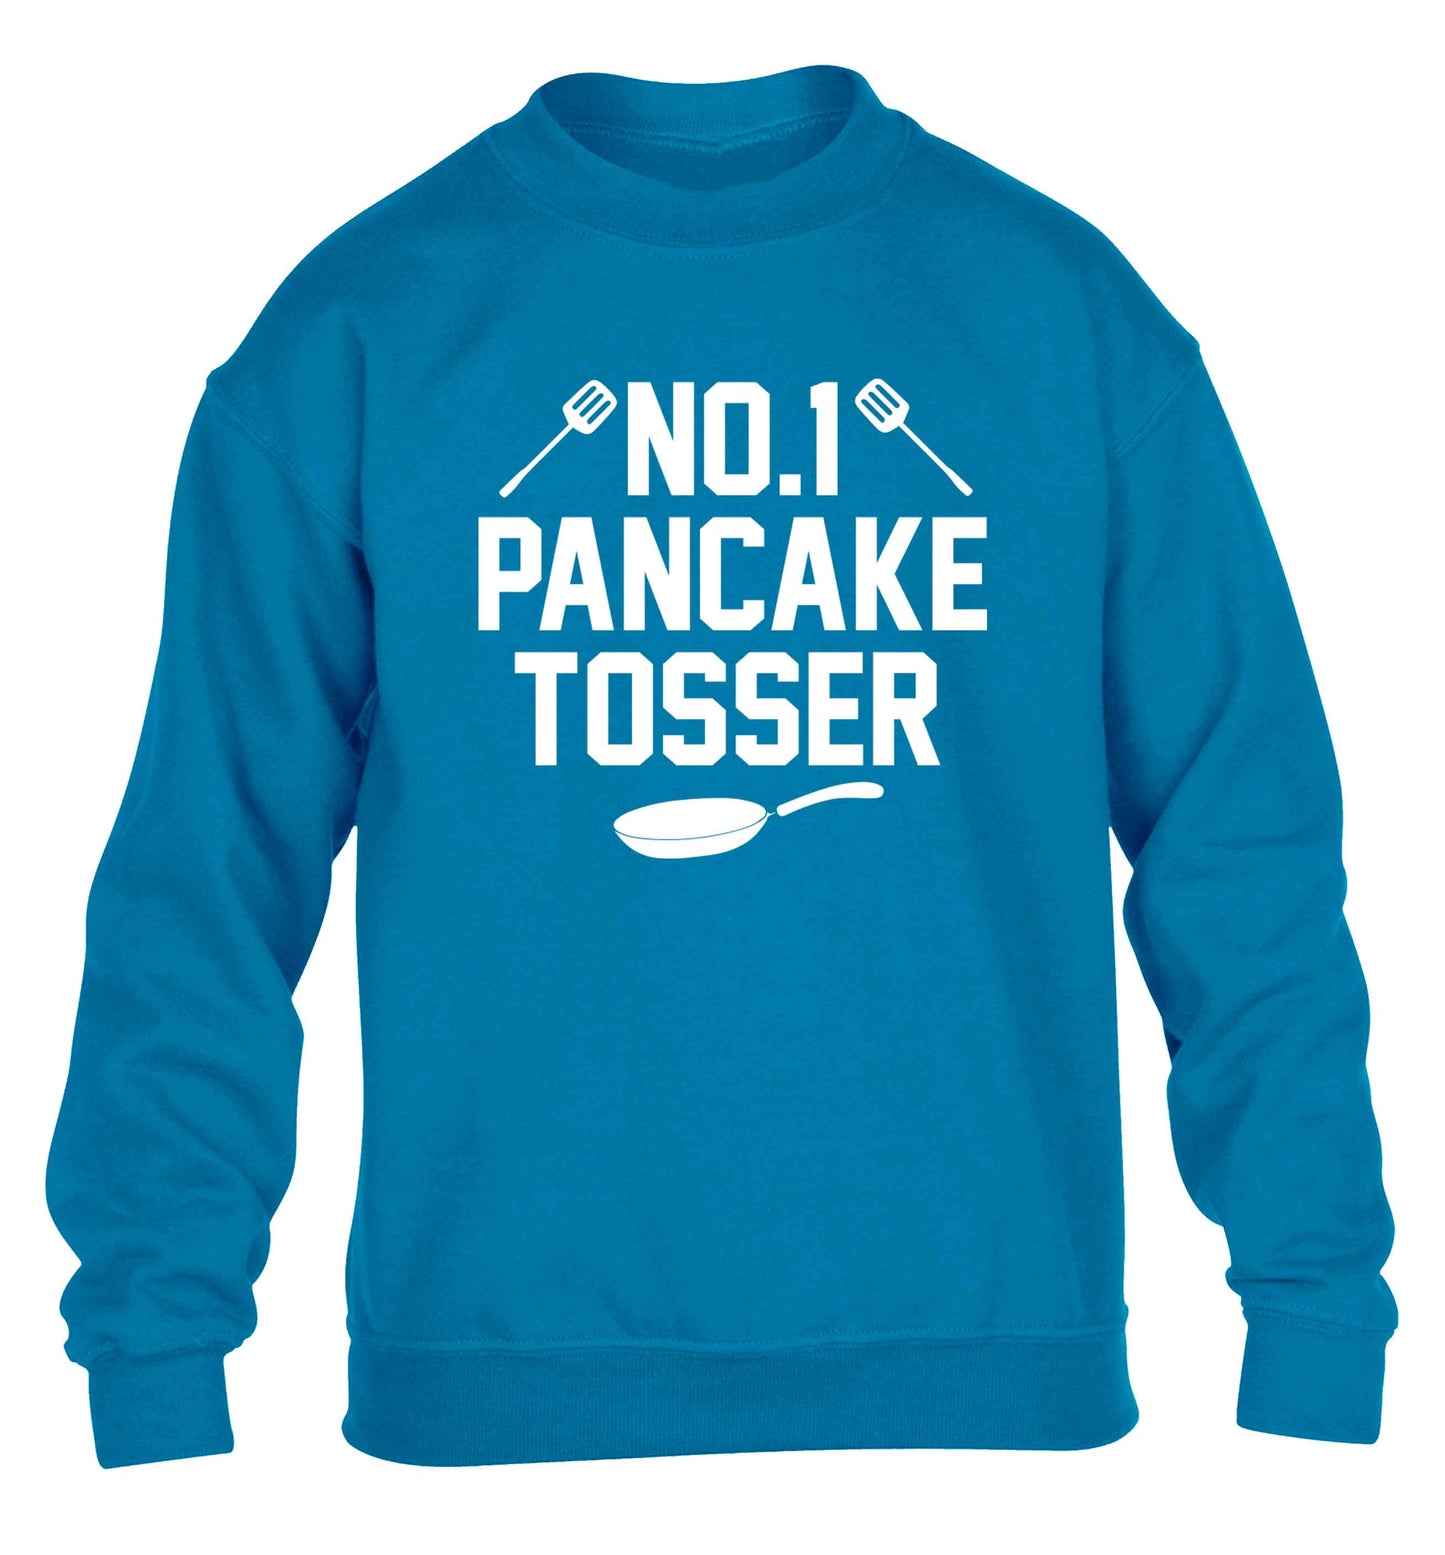 No.1 Pancake tosser children's blue sweater 12-13 Years